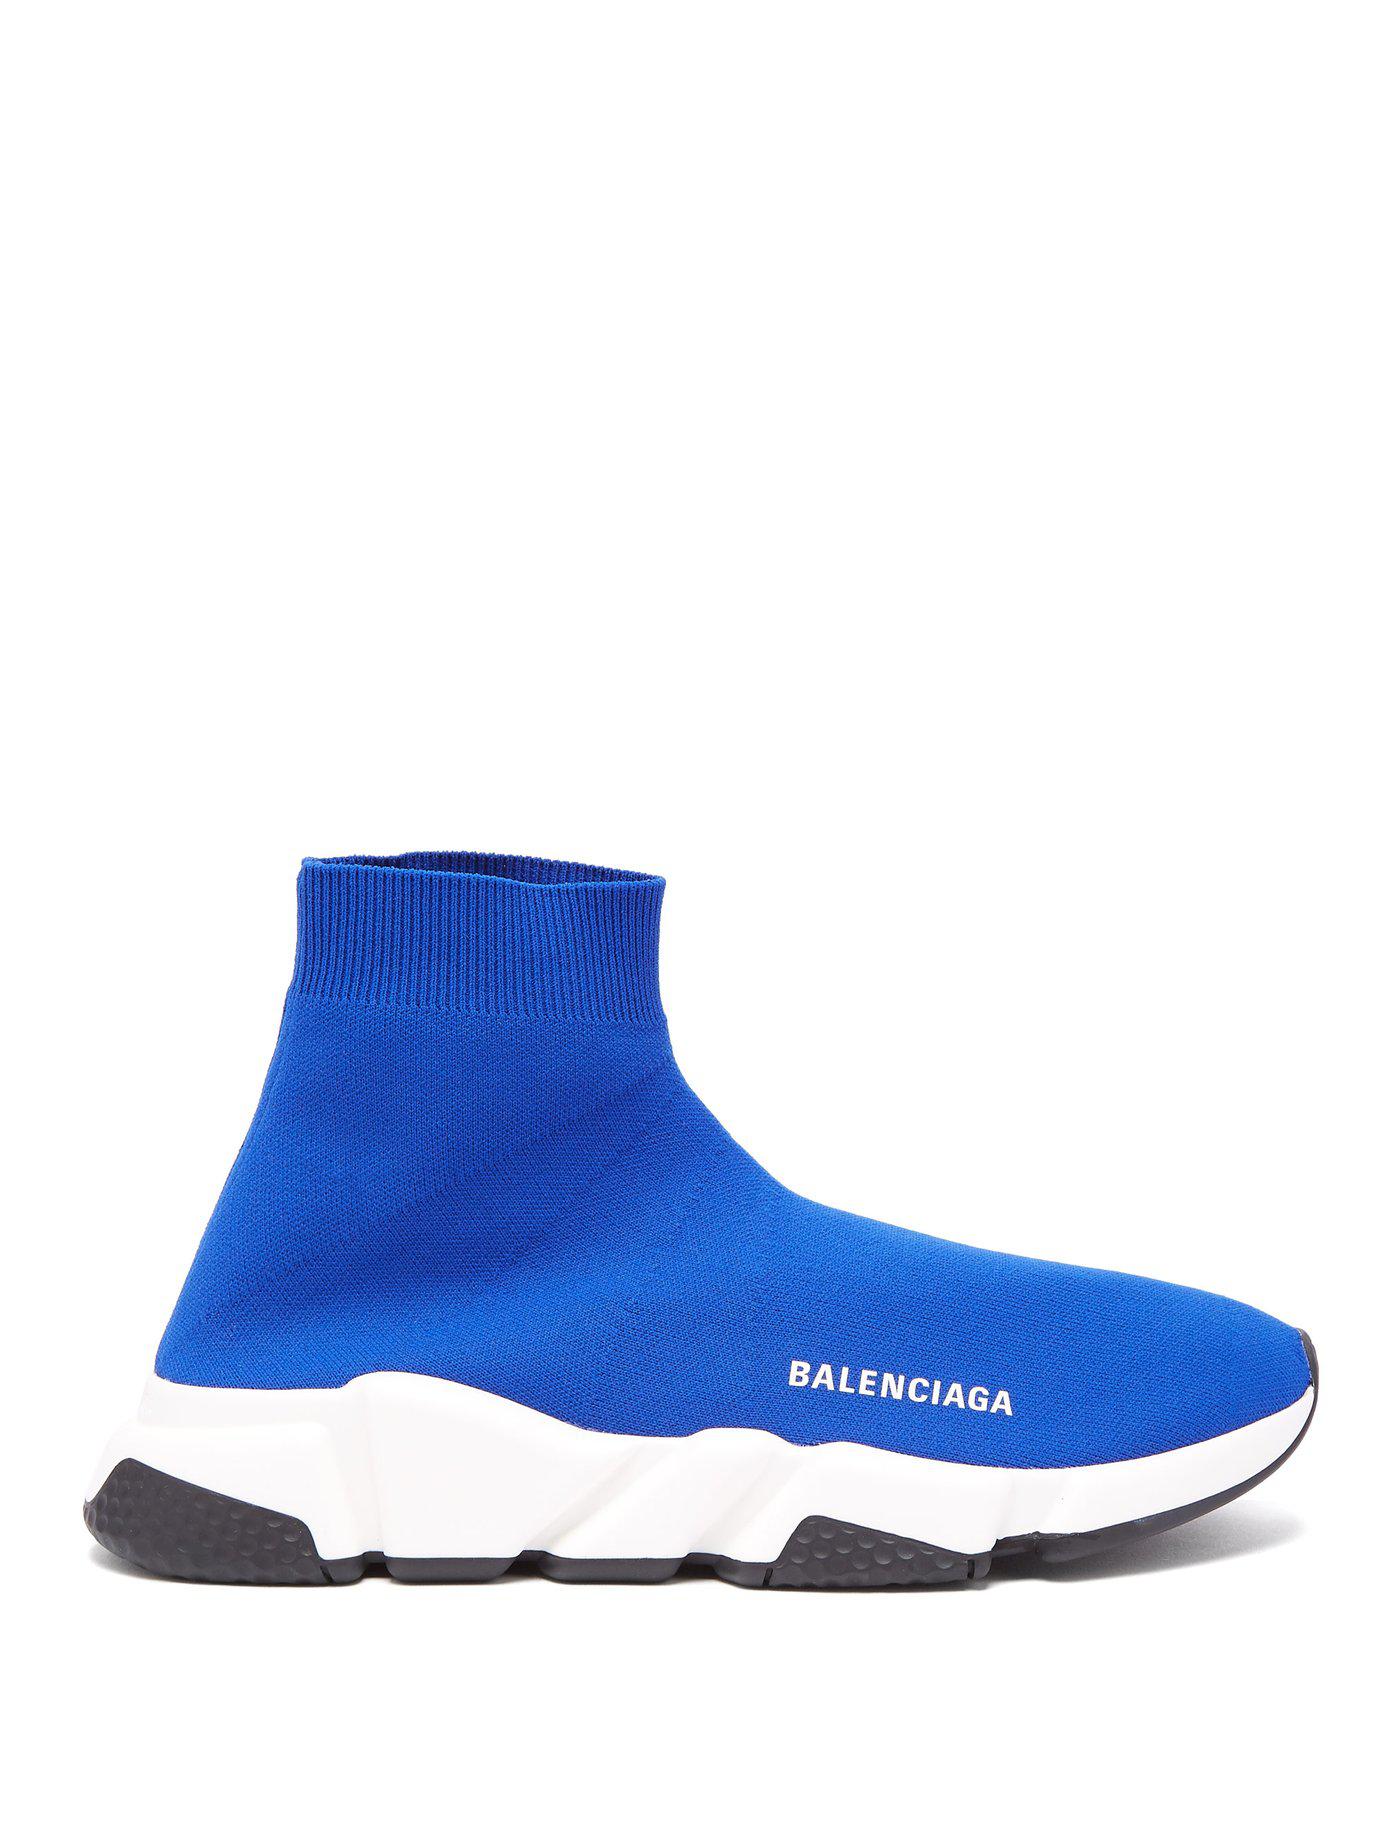 Blue Balenciaga Sock Shoes United Kingdom, SAVE 40% - raptorunderlayment.com